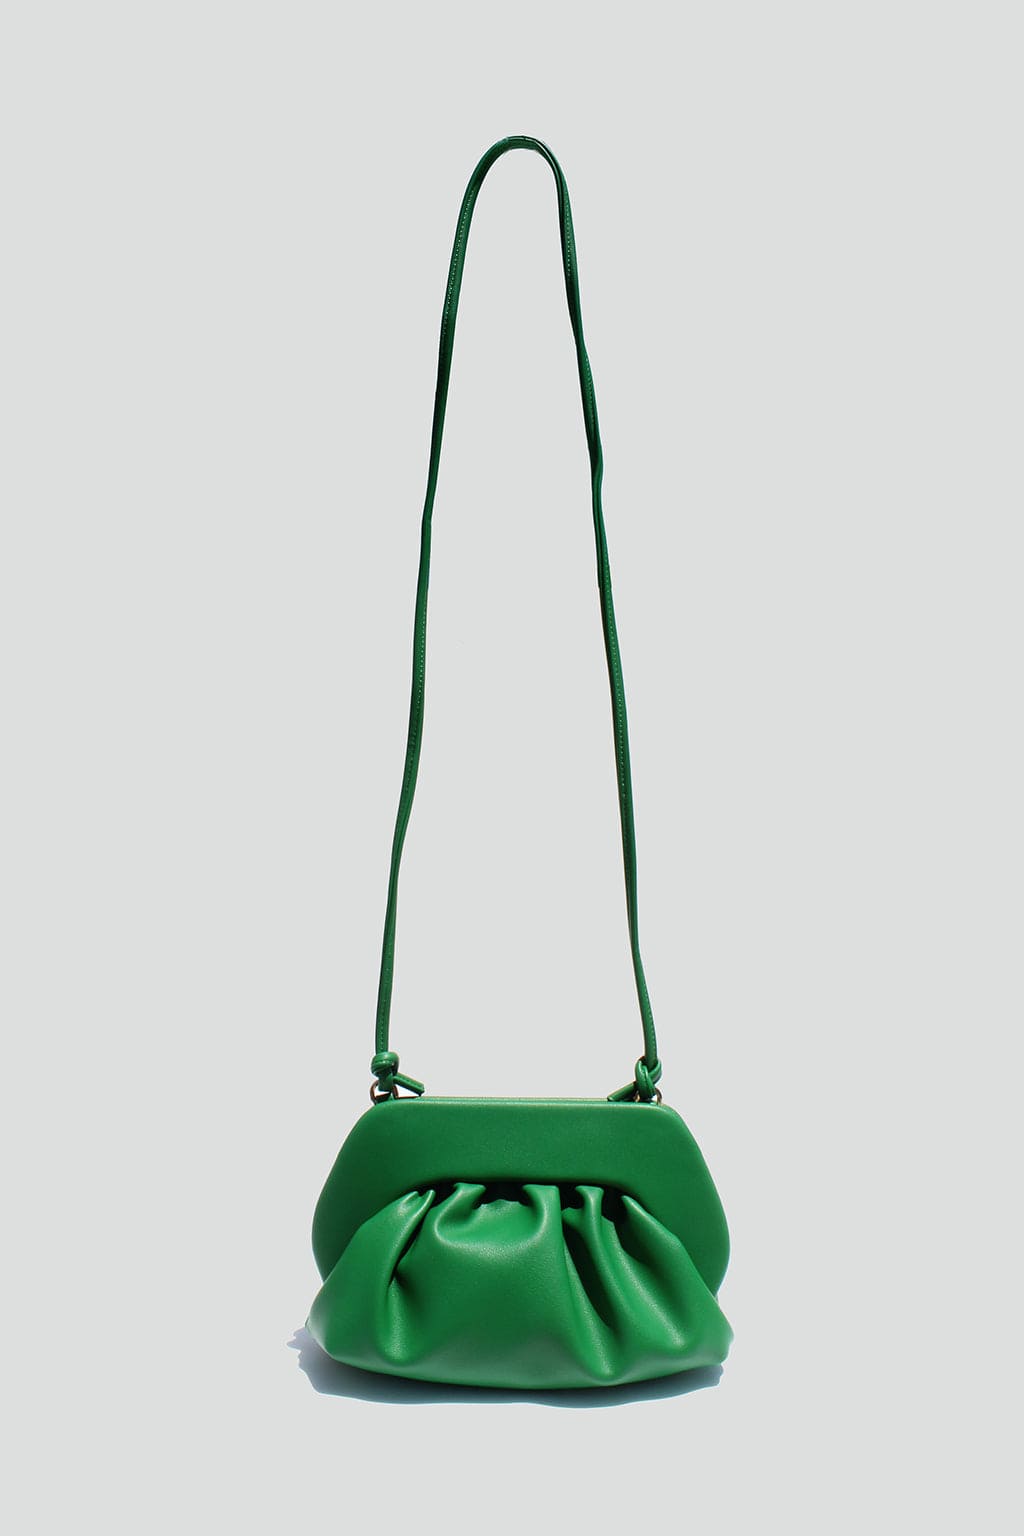 Isla Framed Purse Green, Bag by Street Level / Triple 7 Global Inc | LIT Boutique